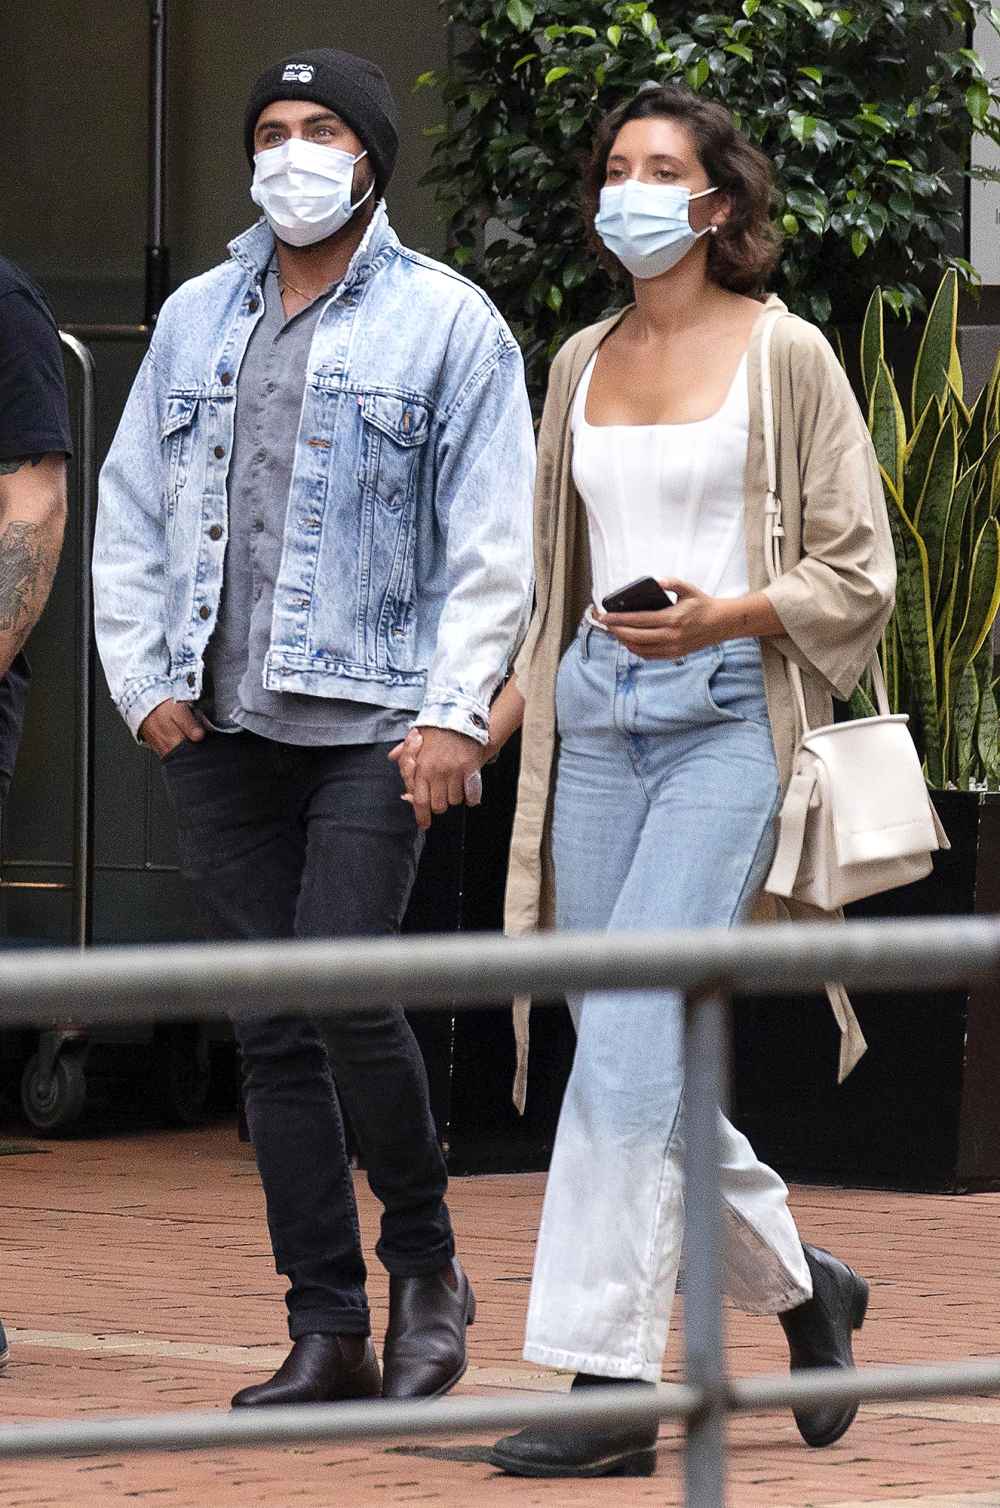 Zac Efron and Girlfriend Vanessa Valladares Hold Hands on Date Night in Sydney: Photo